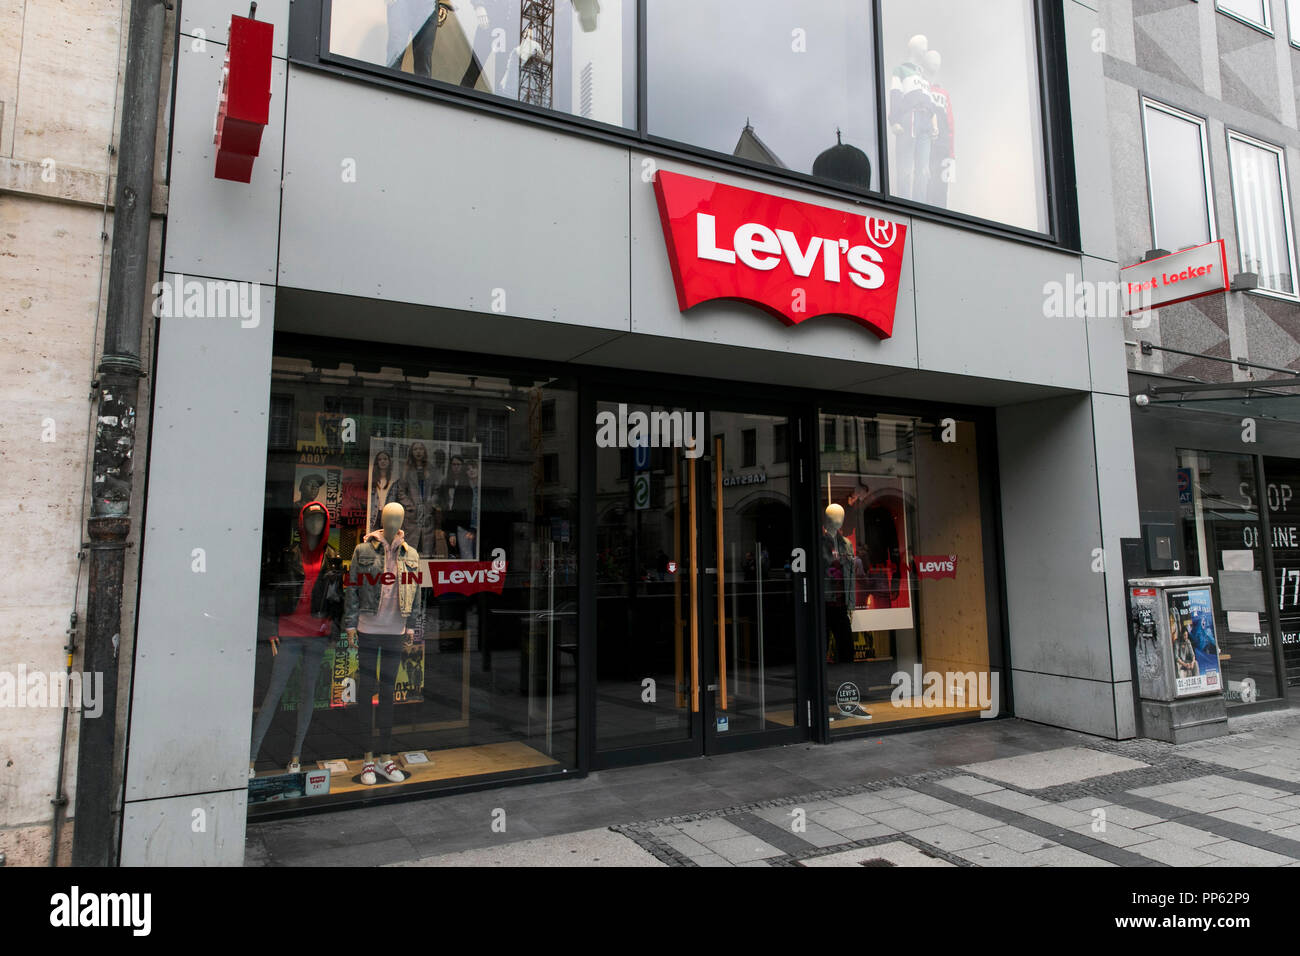 levi's retail store locations